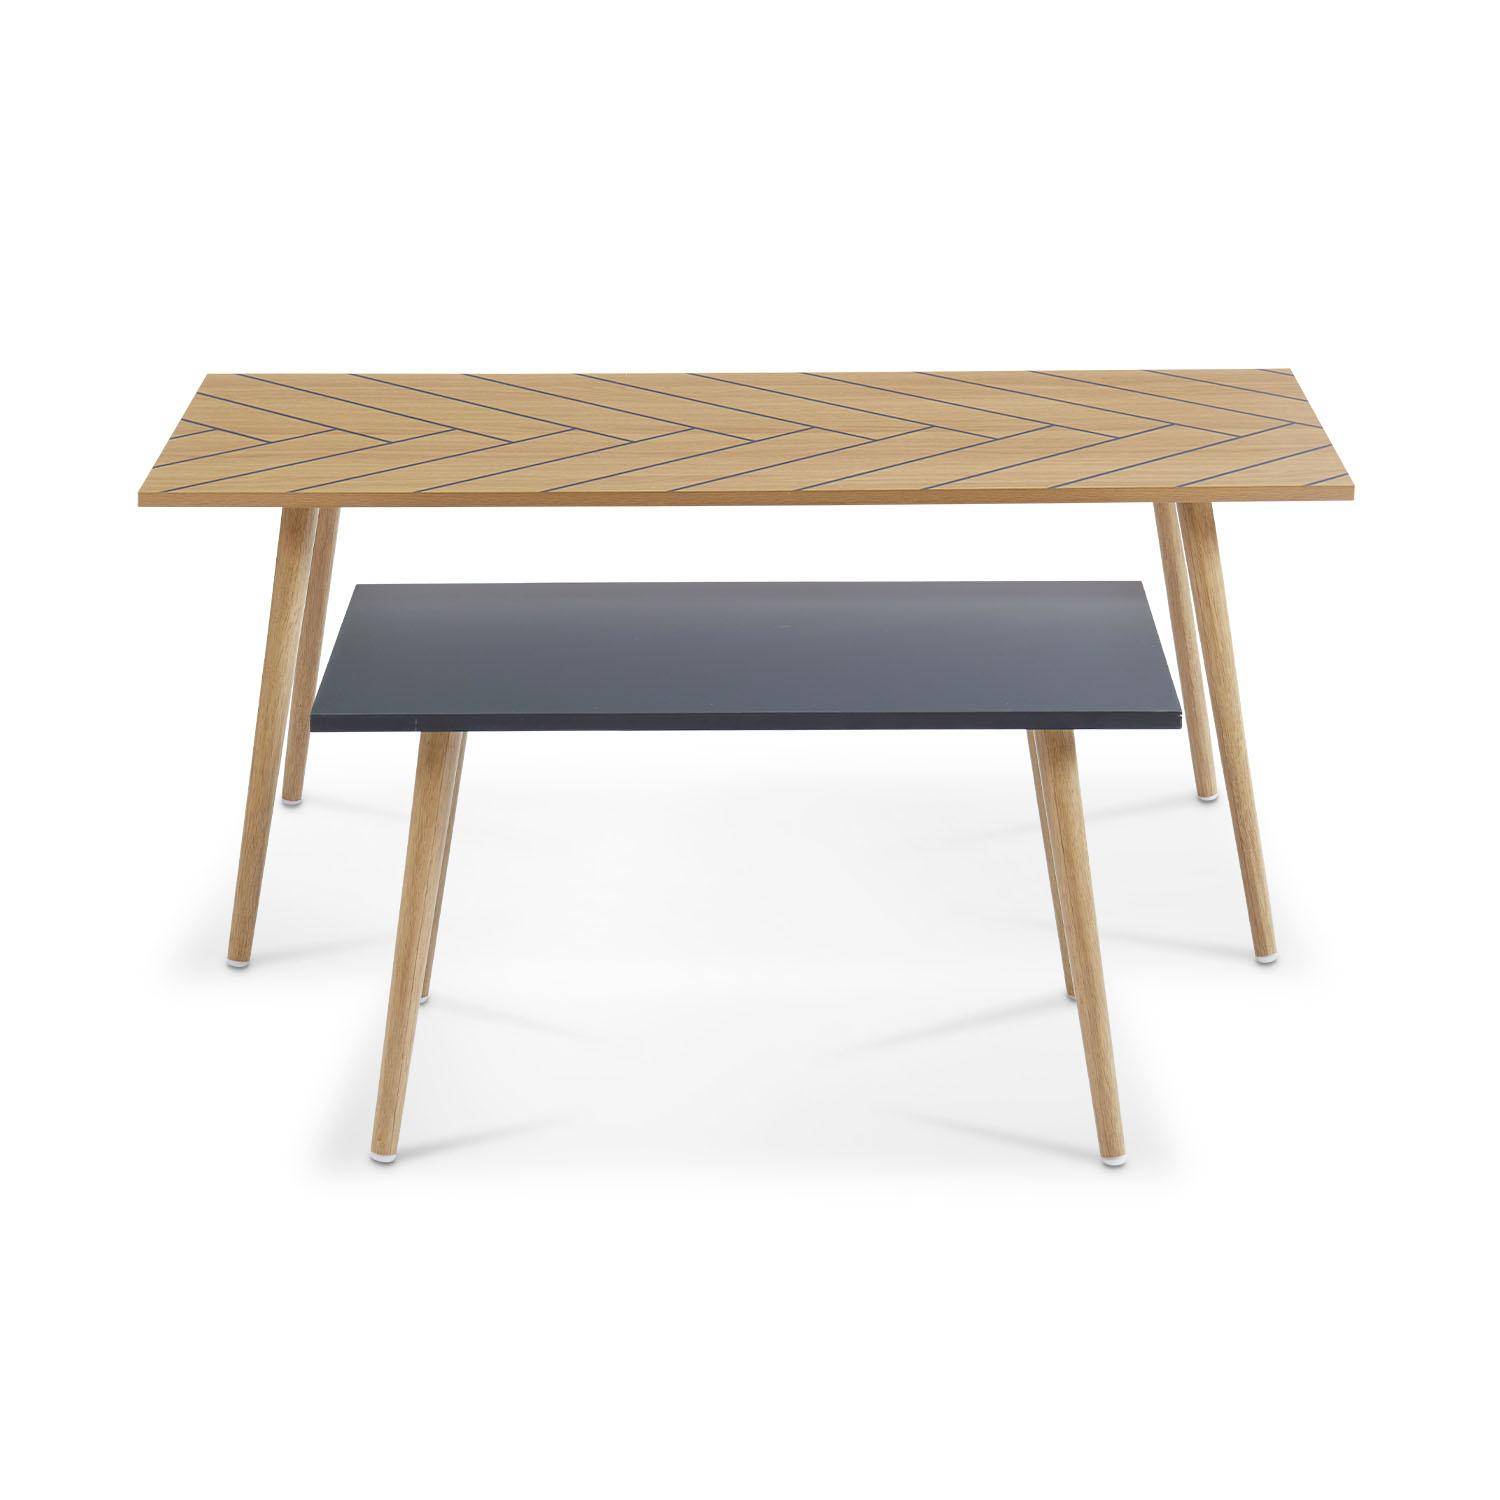 Conjunto de 2 mesas de centro natural y gris - 110x50x45,5cm y 70x40x39cm - Etnik - base de madera maciza de eucalipto, diseño escandinavo Photo2